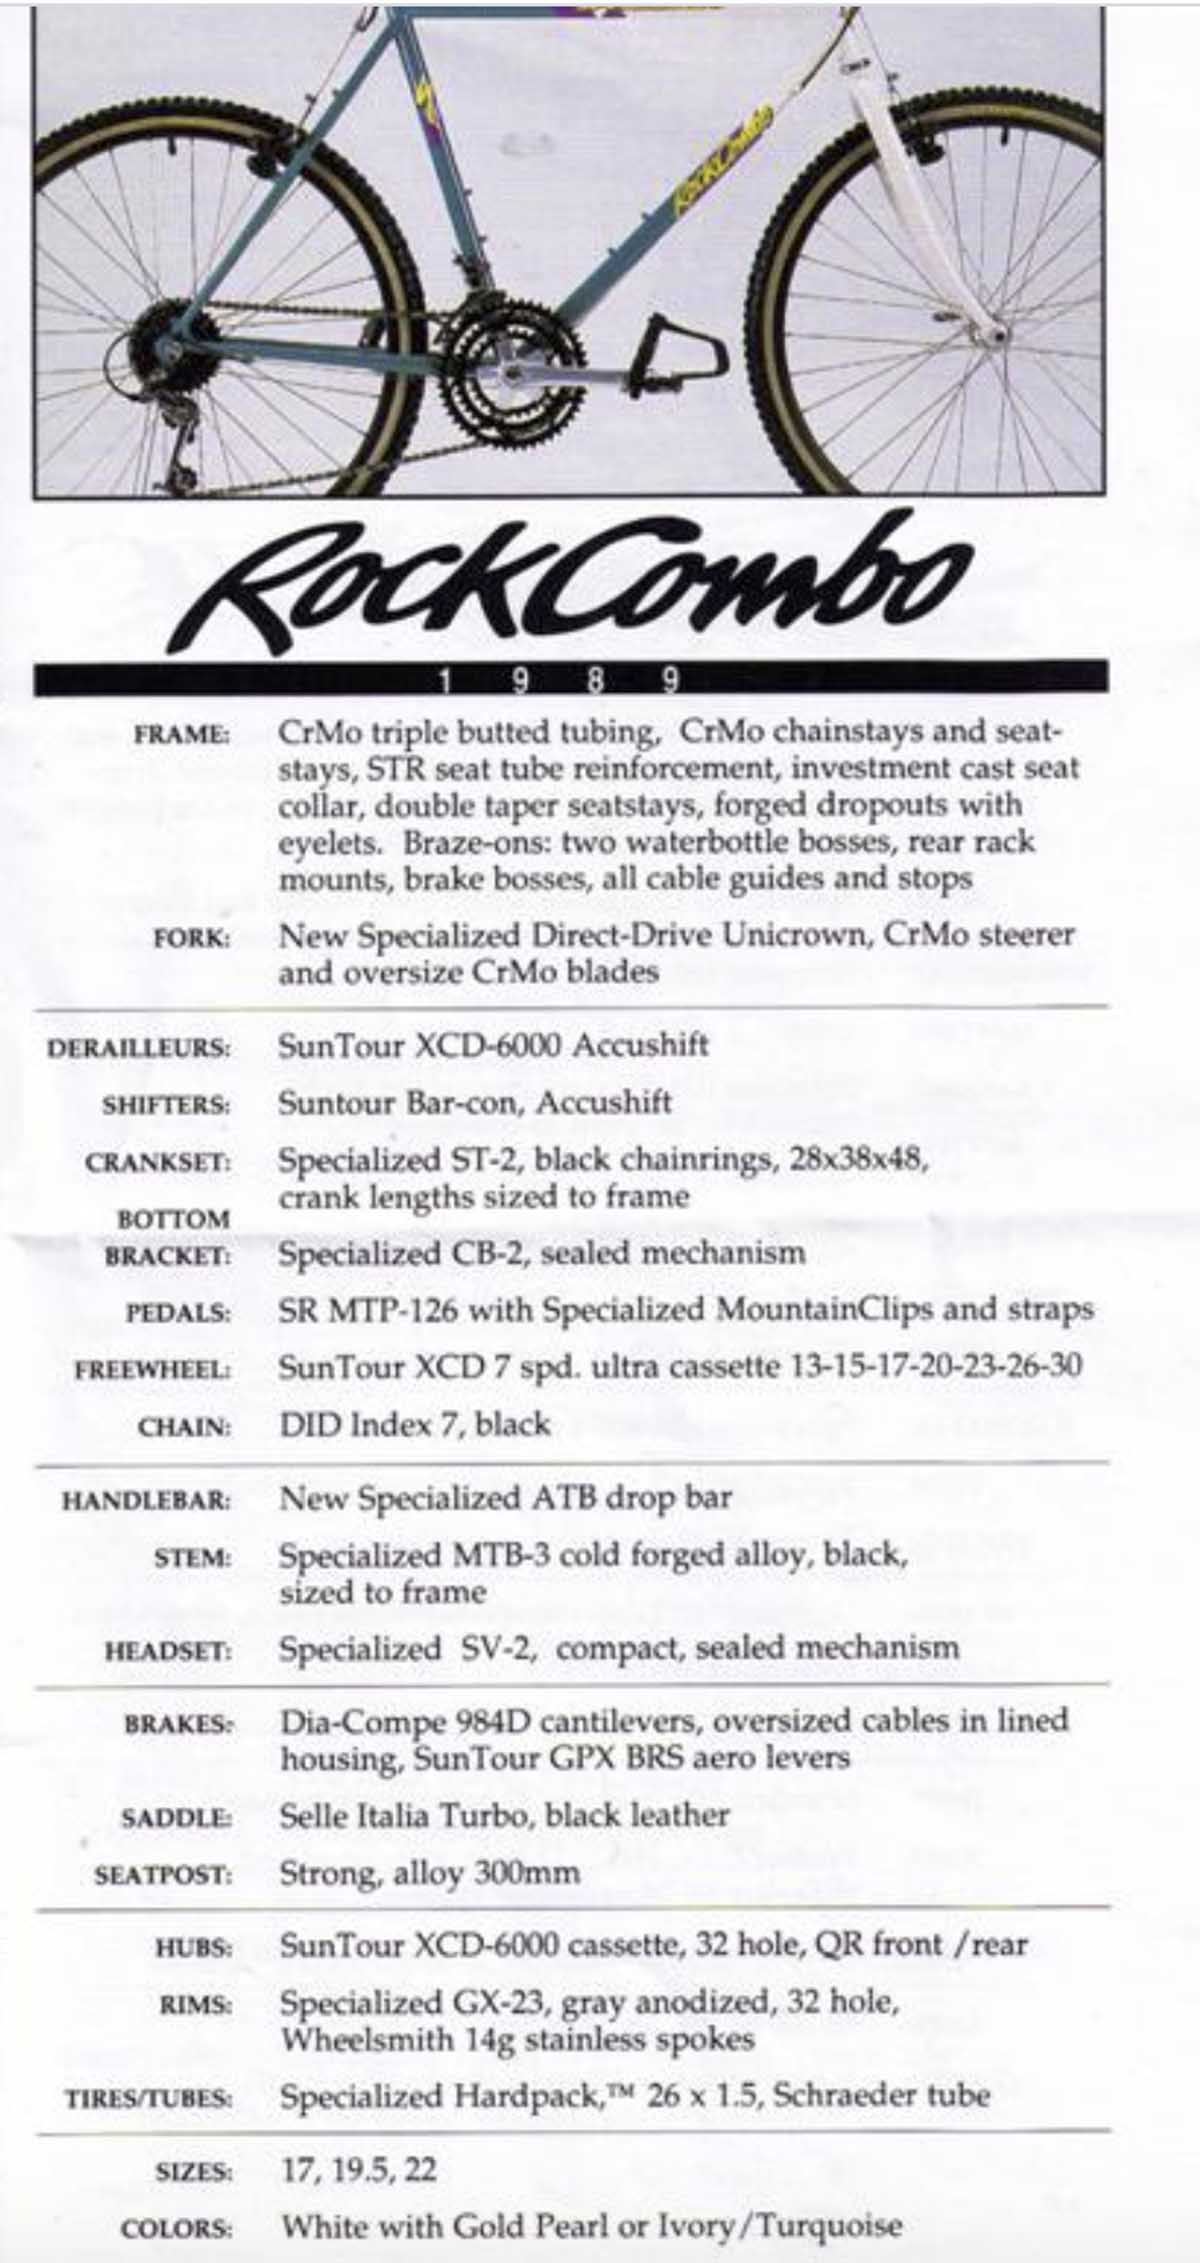 Specialized 1989 RockCombo ad